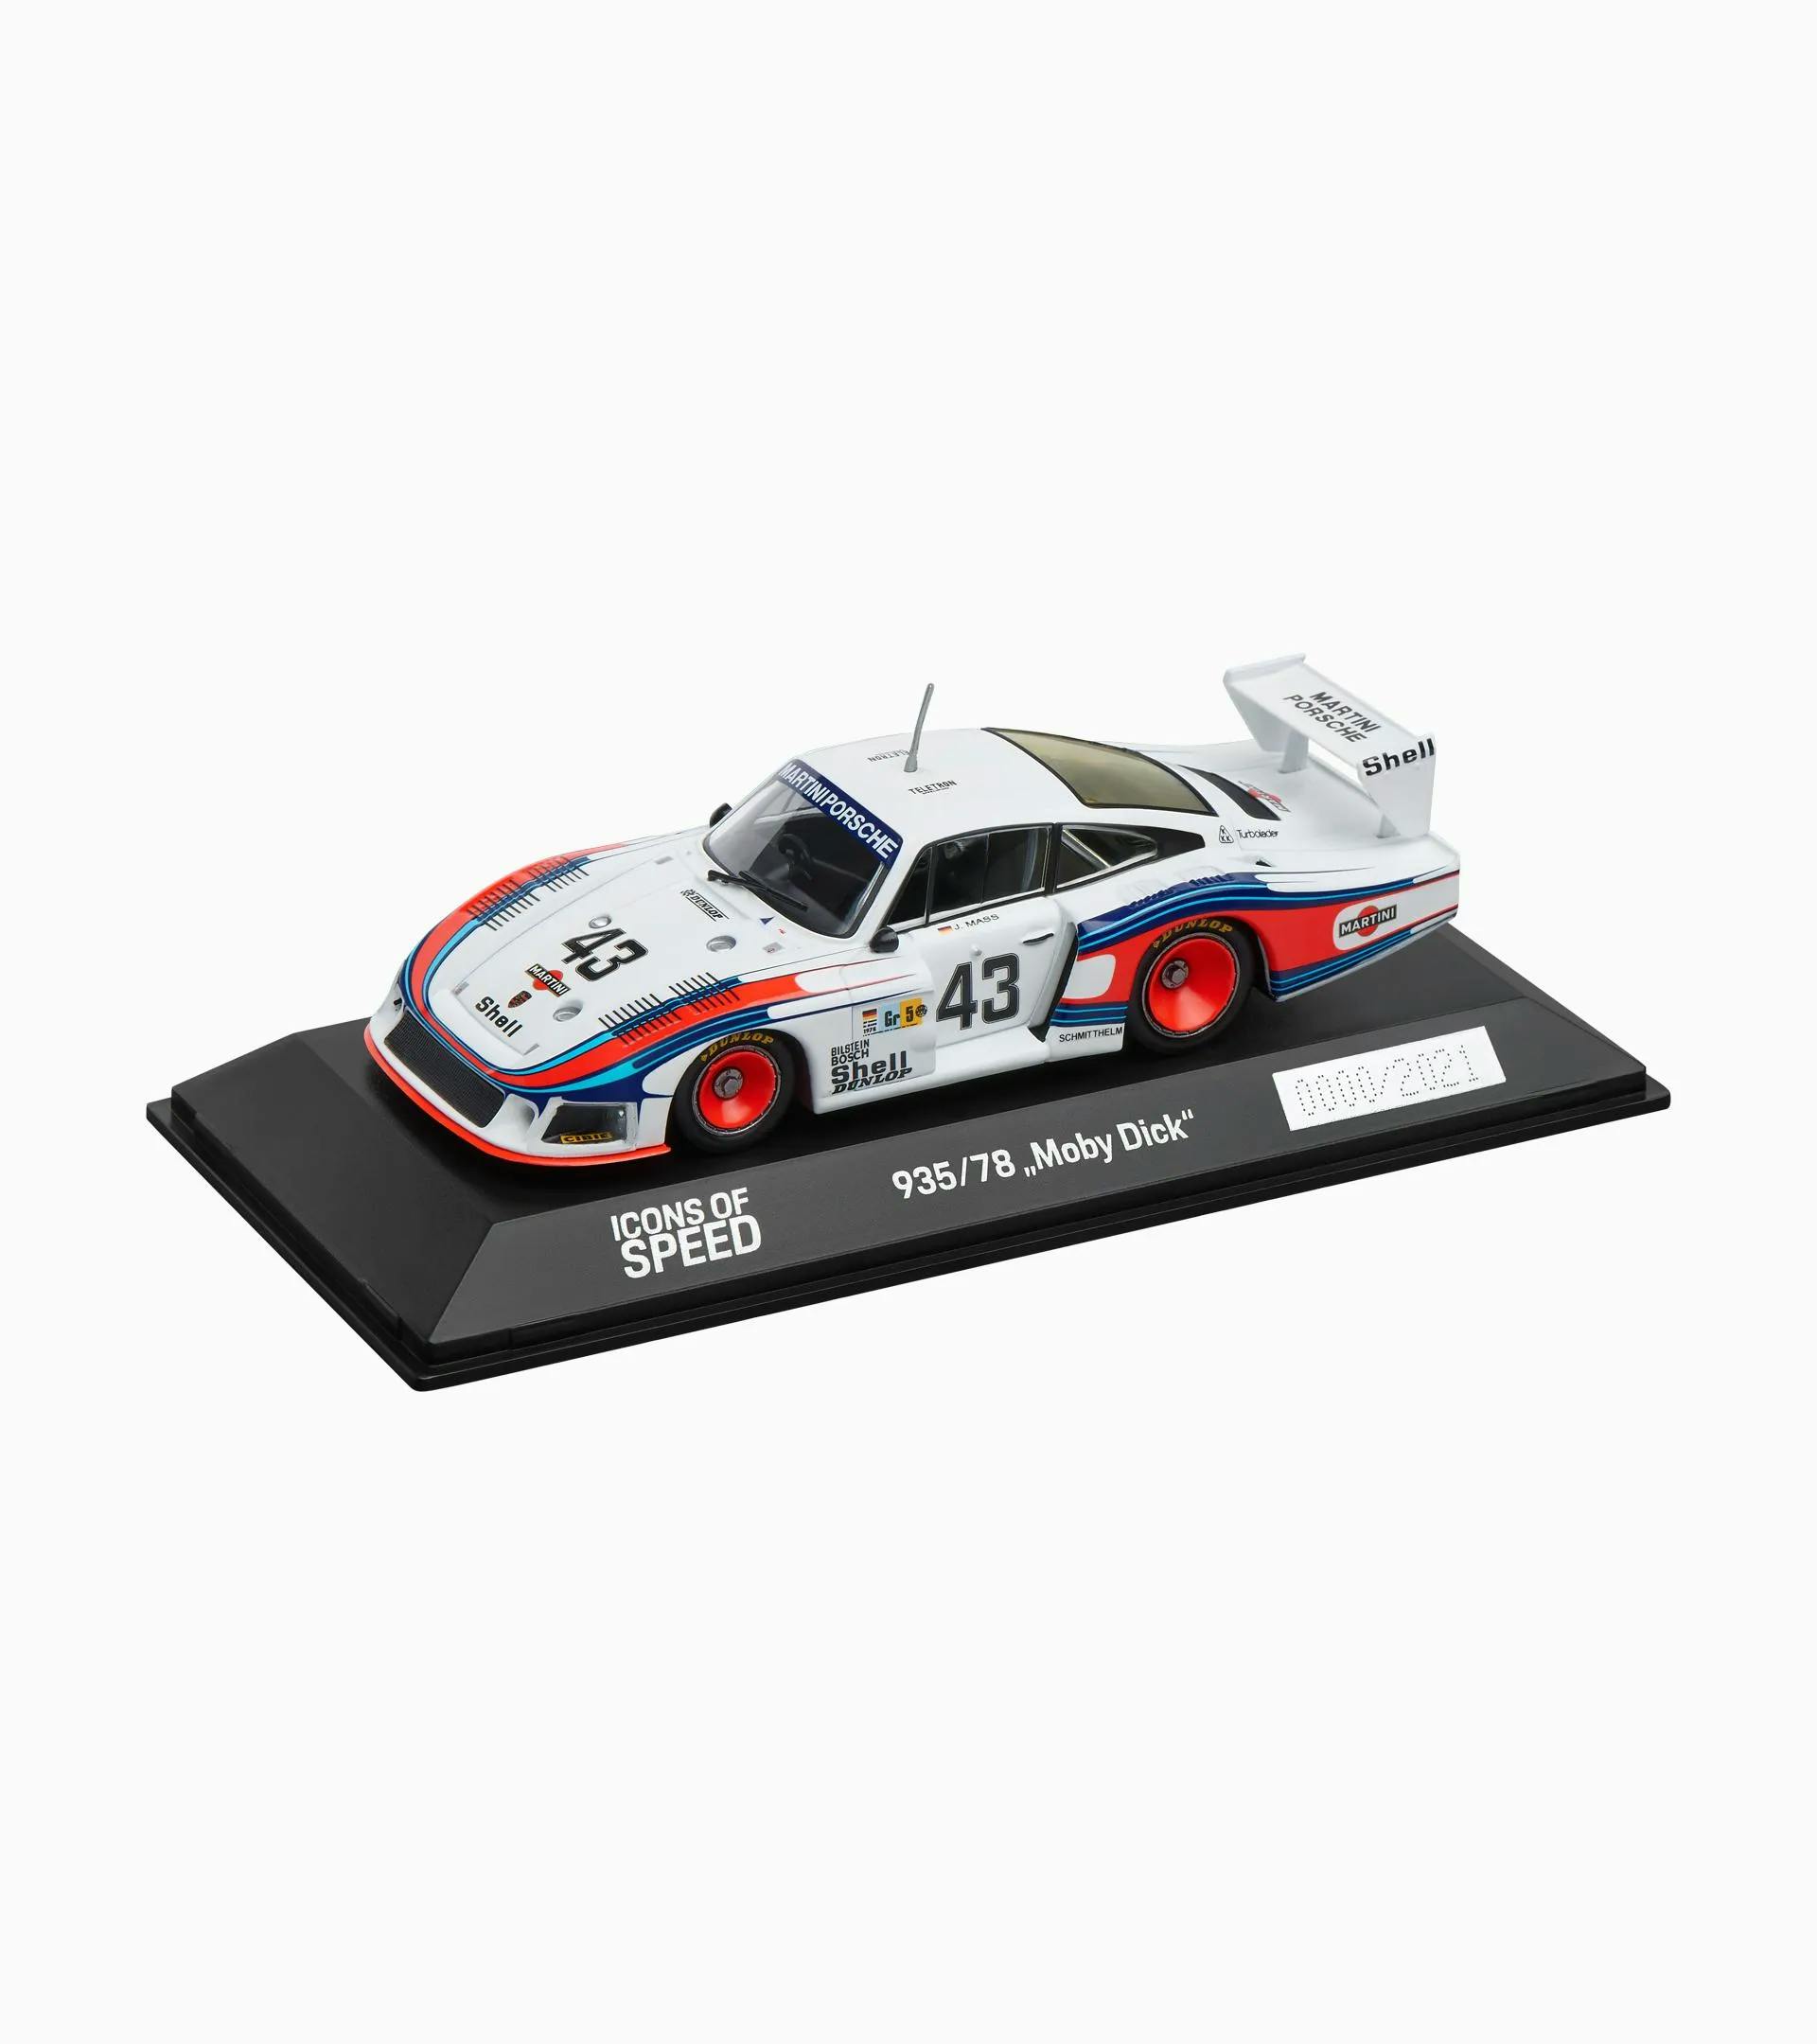 Porsche 935/78 "Moby Dick", Spectrum Edition (Kalender 2021) – Ltd. 1